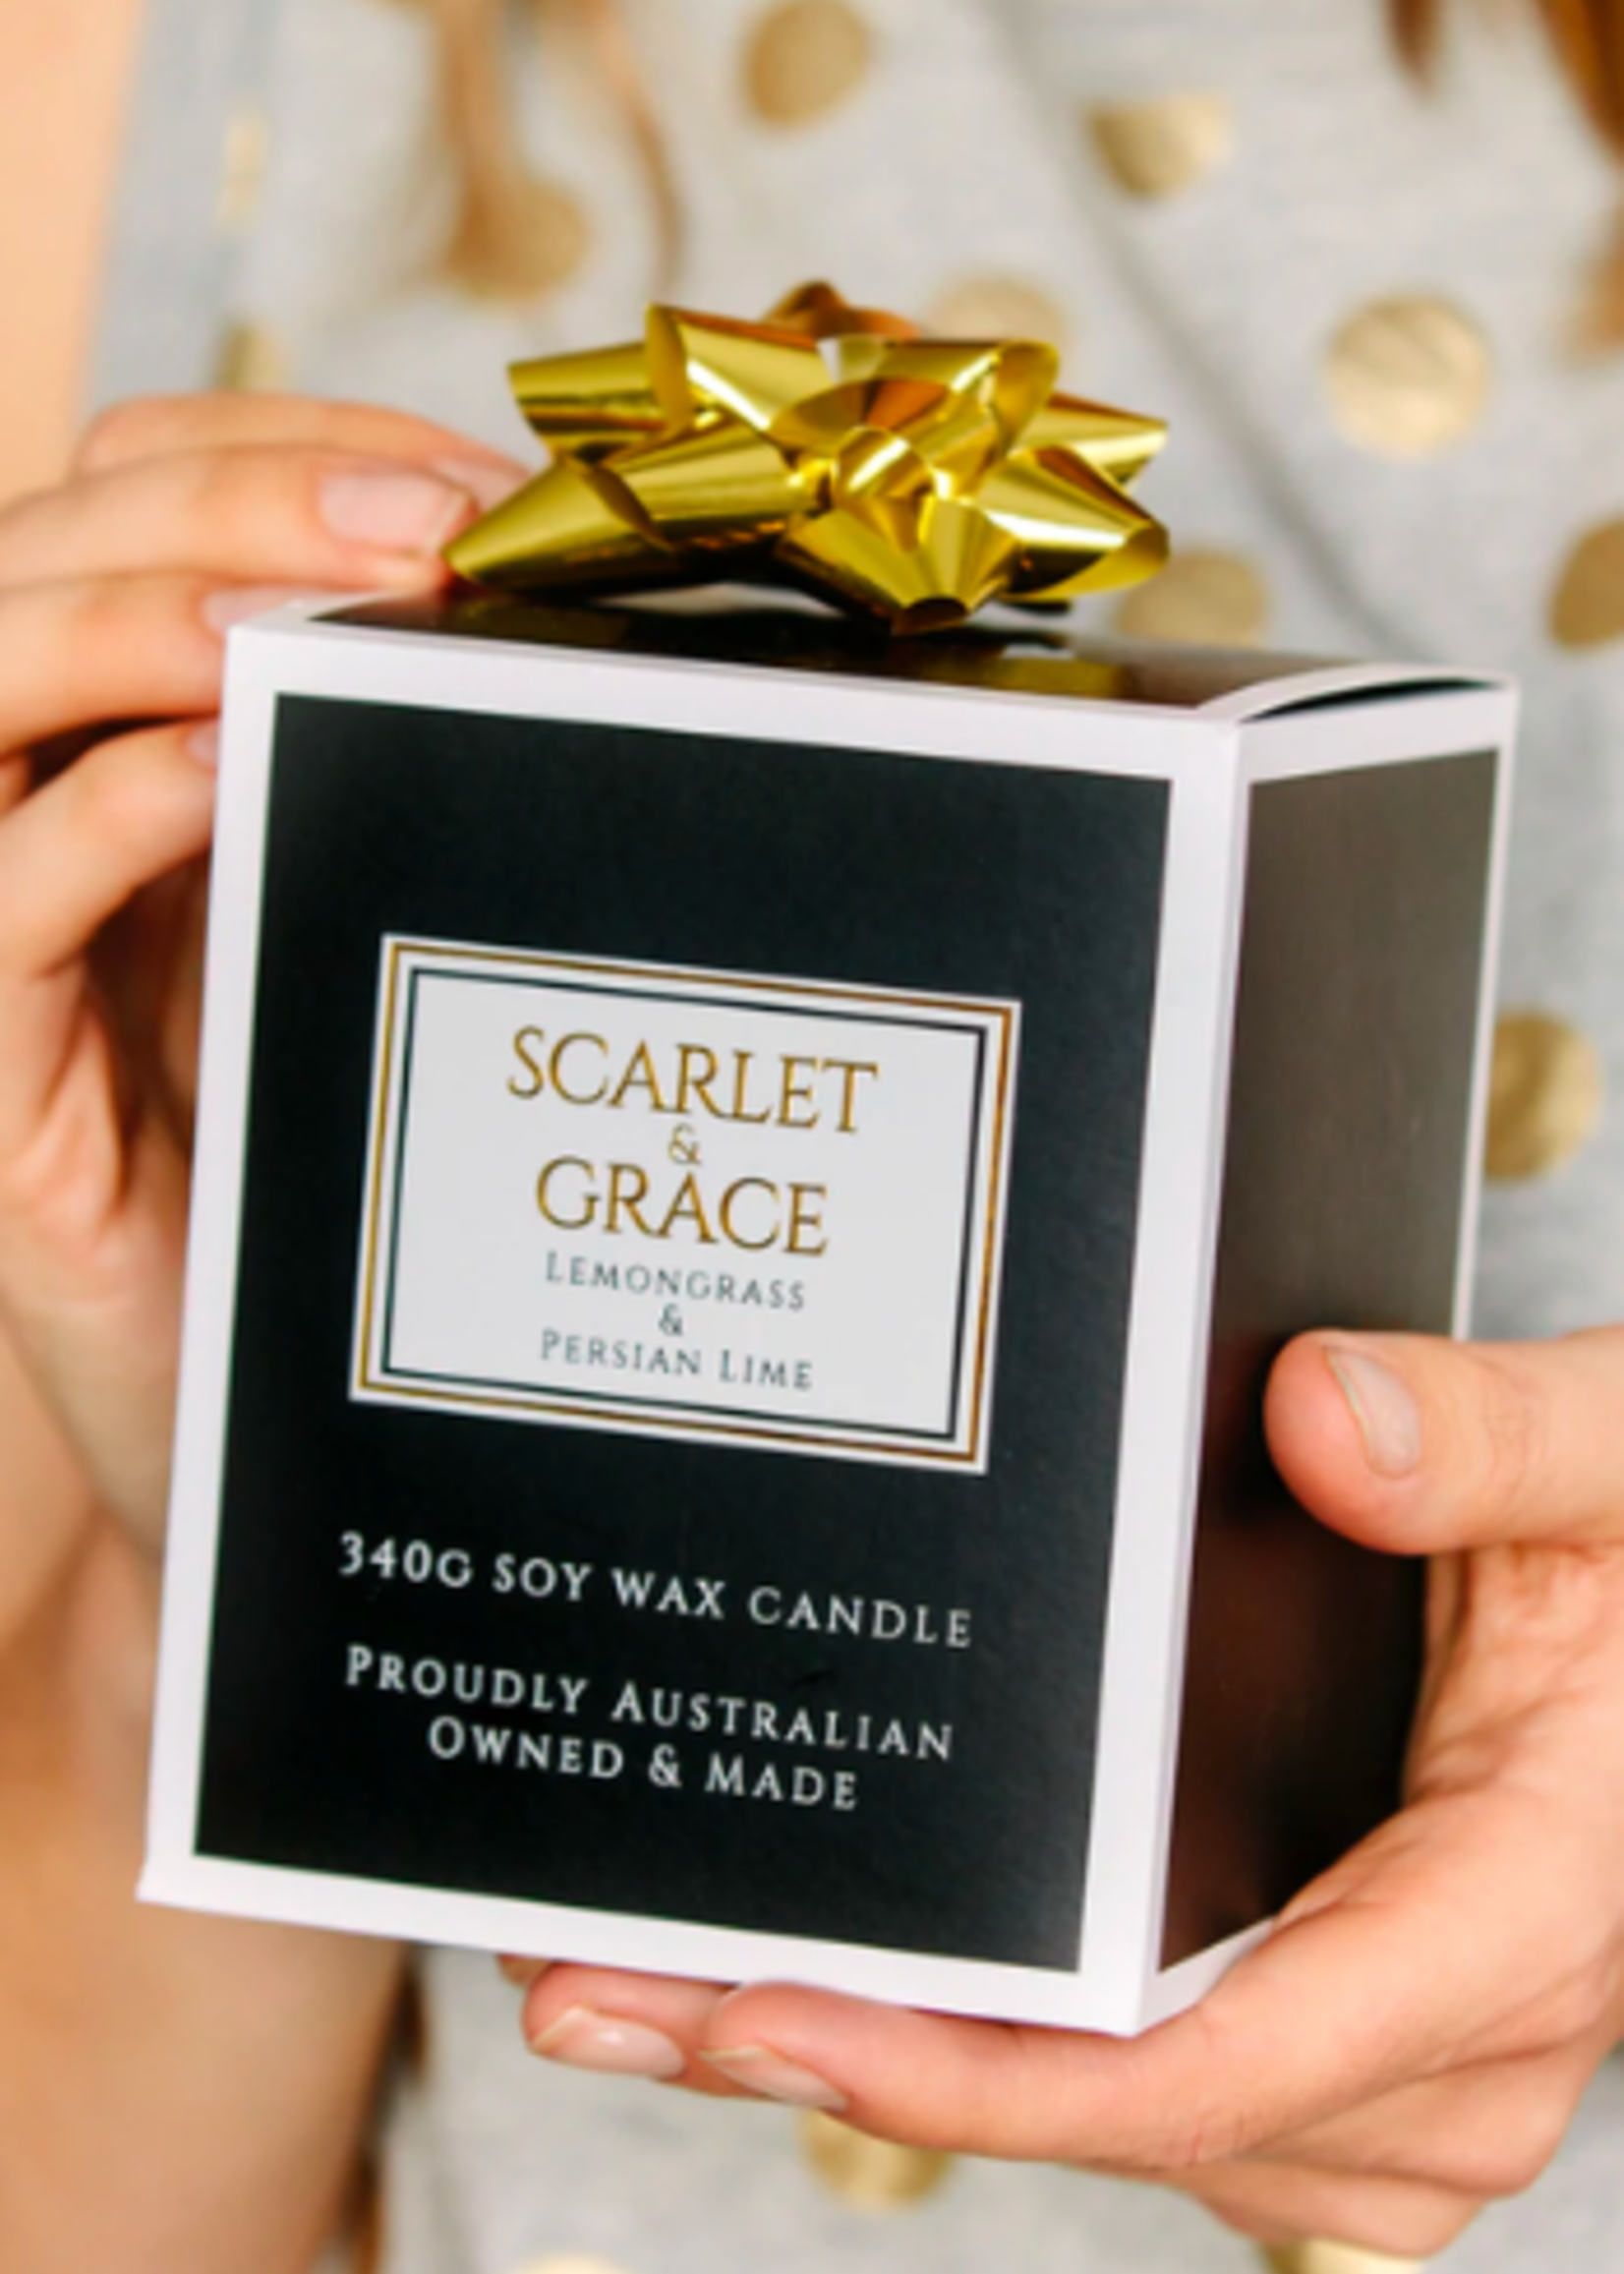 Scarlet & Grace 340g Soy Wax Candle - Vanilla Caramel